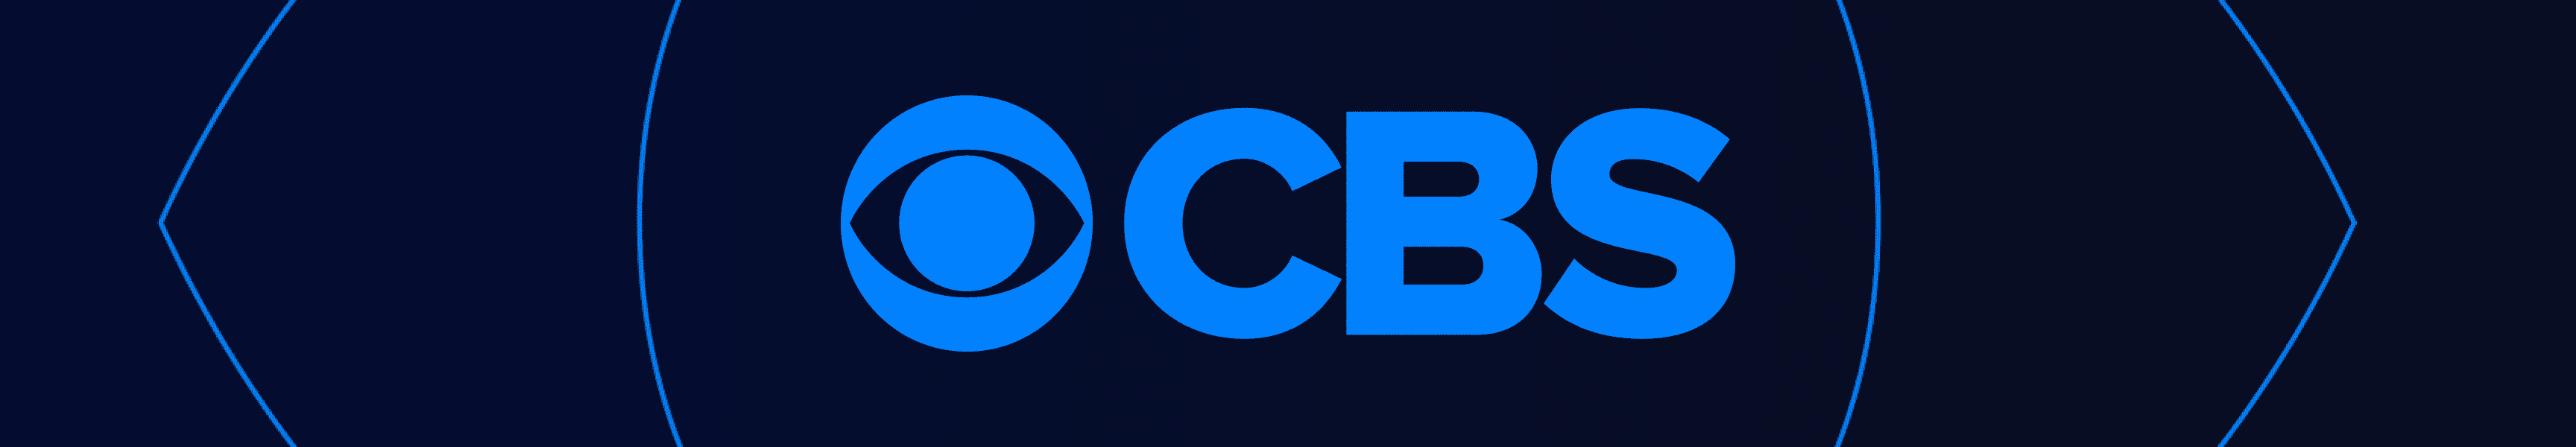 CBS Entertainment Hats